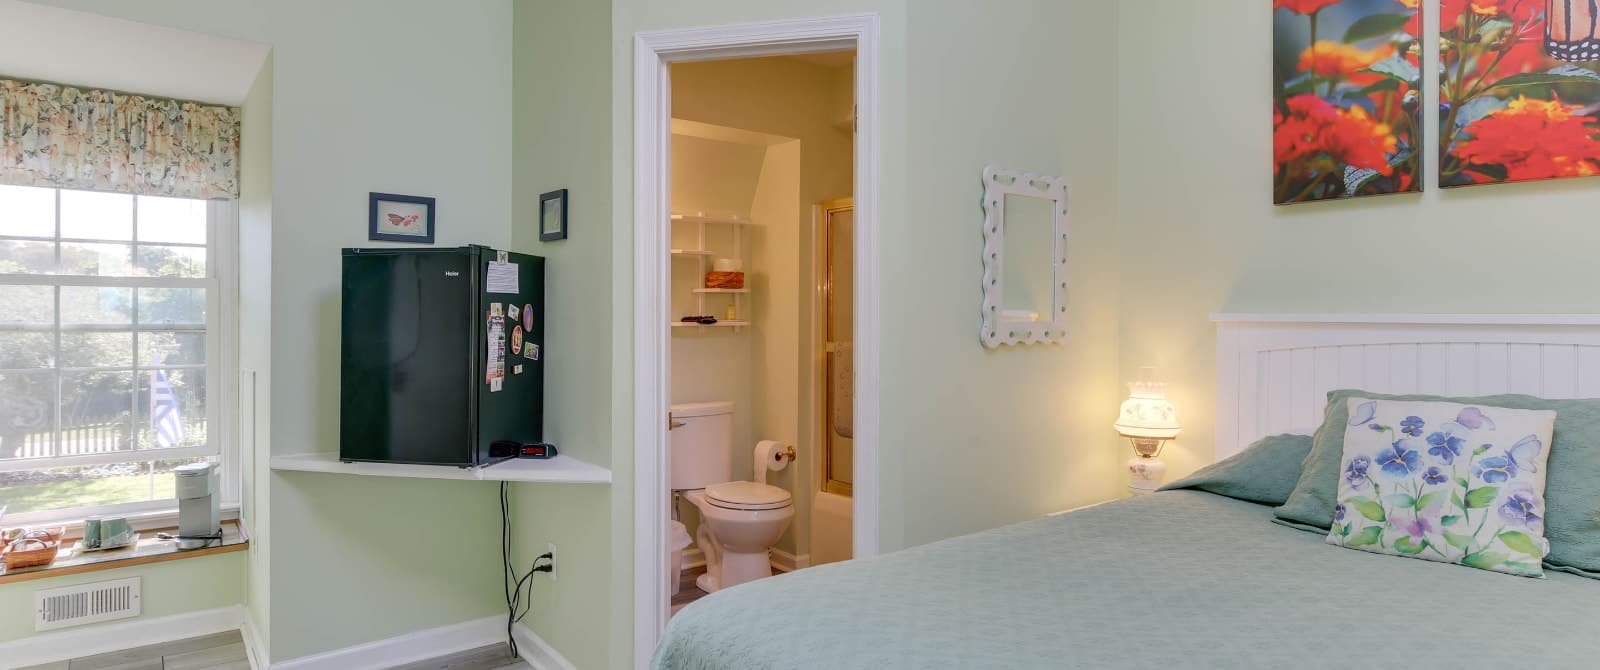 Bedroom with light green walls, hardwood flooring, light green bedding, mini fridge, and view into bathroom